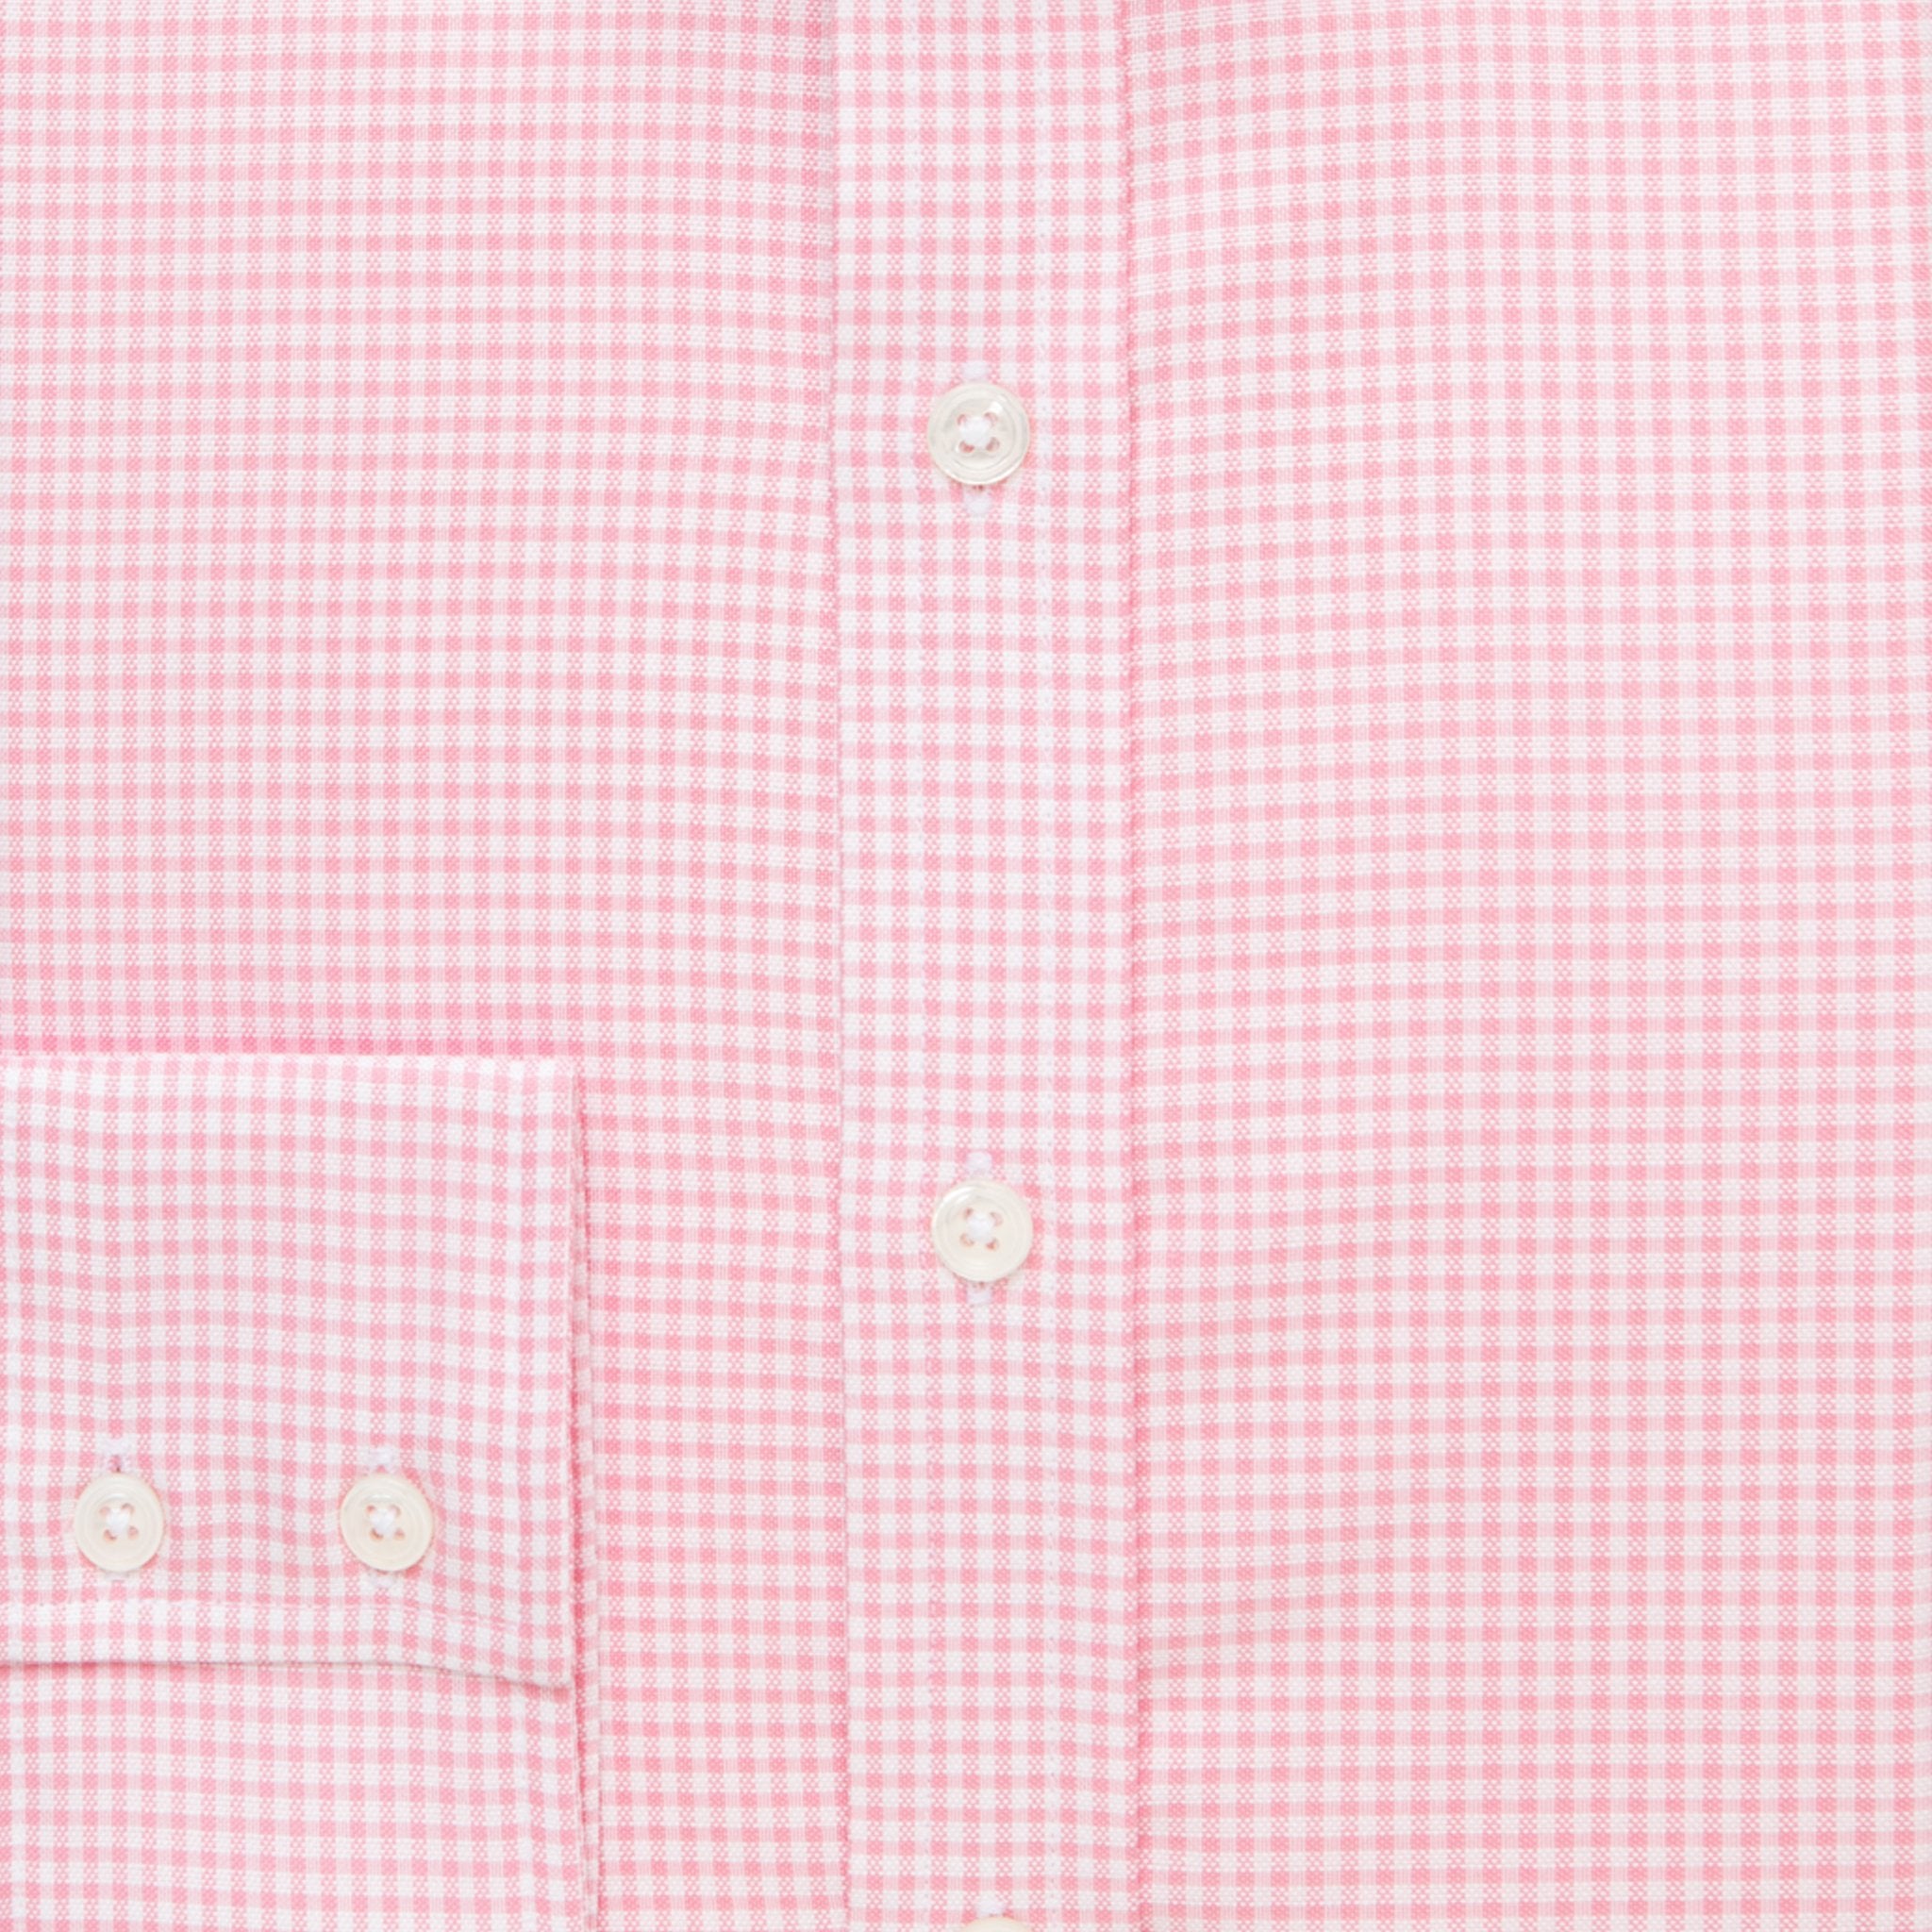 Pink Oxford Check Cotton Shirt freeshipping - Emma Willis